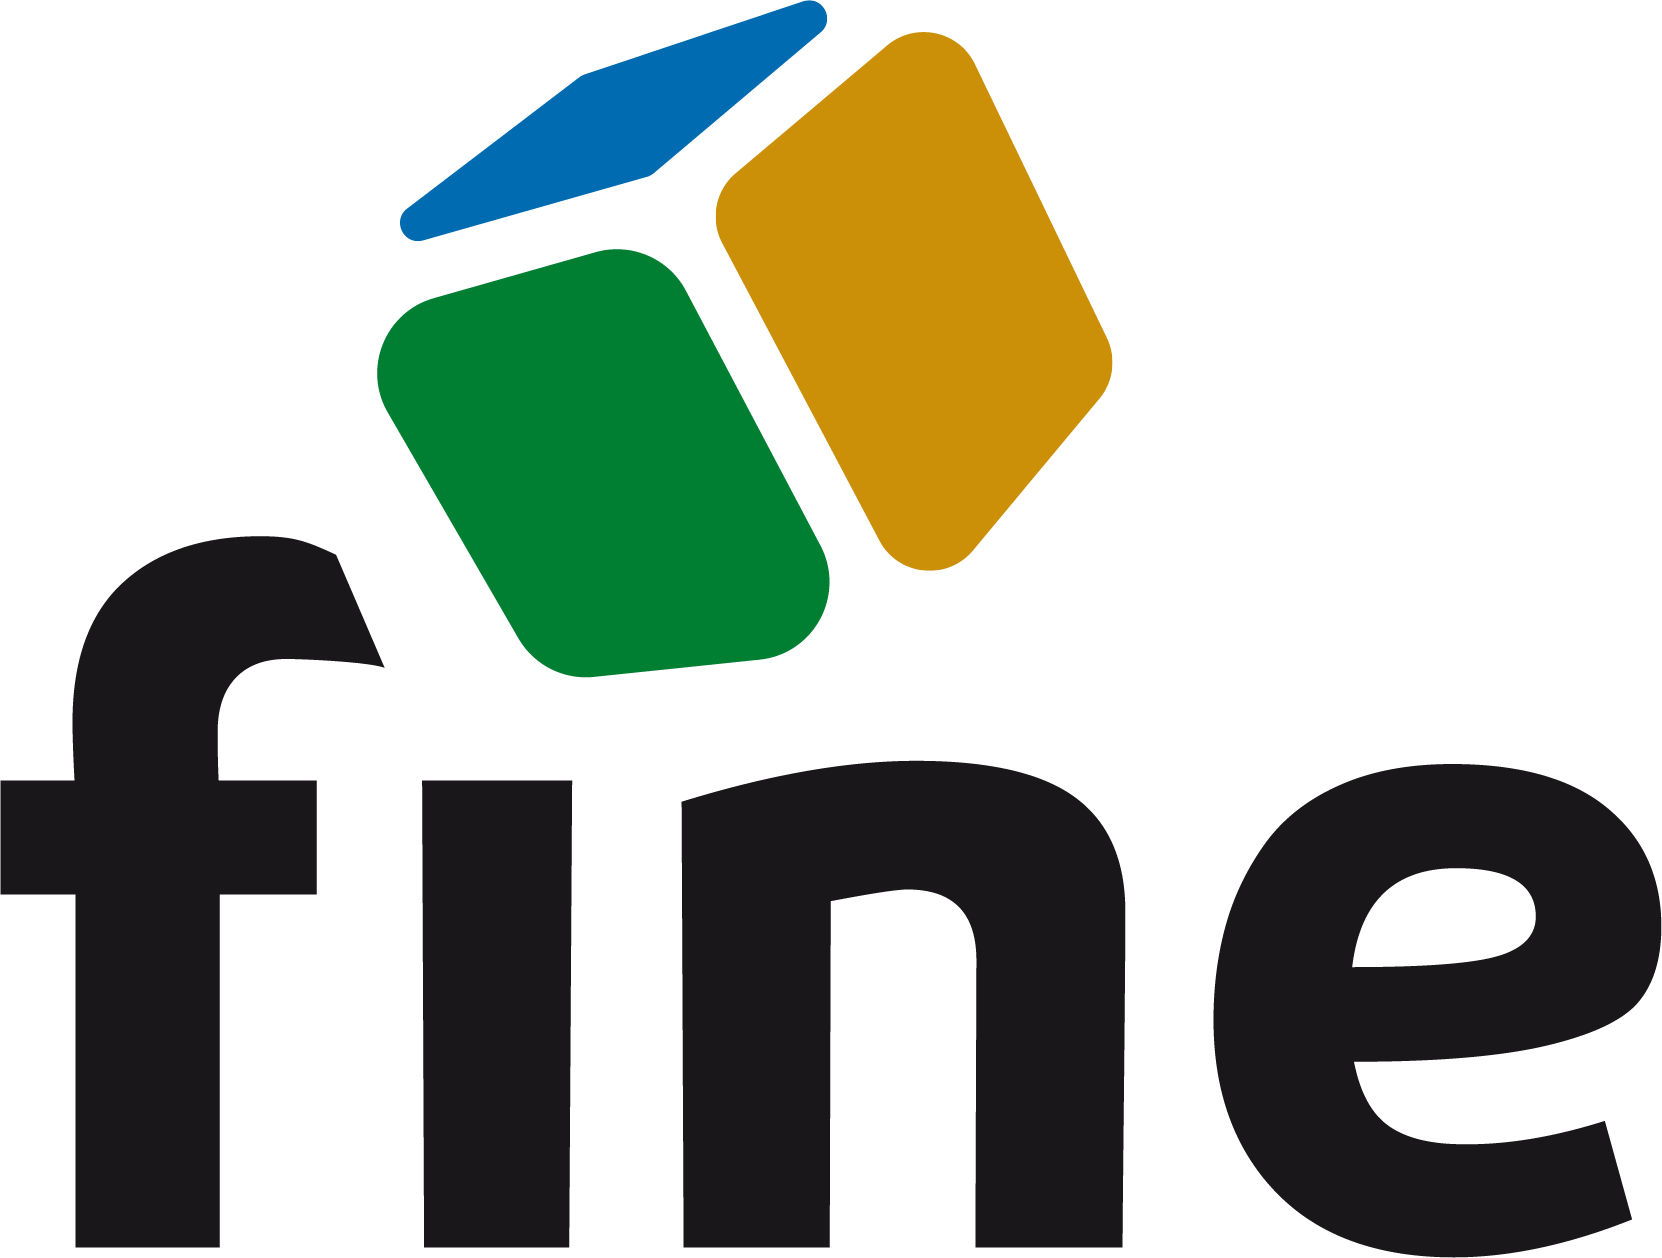 Fine Software